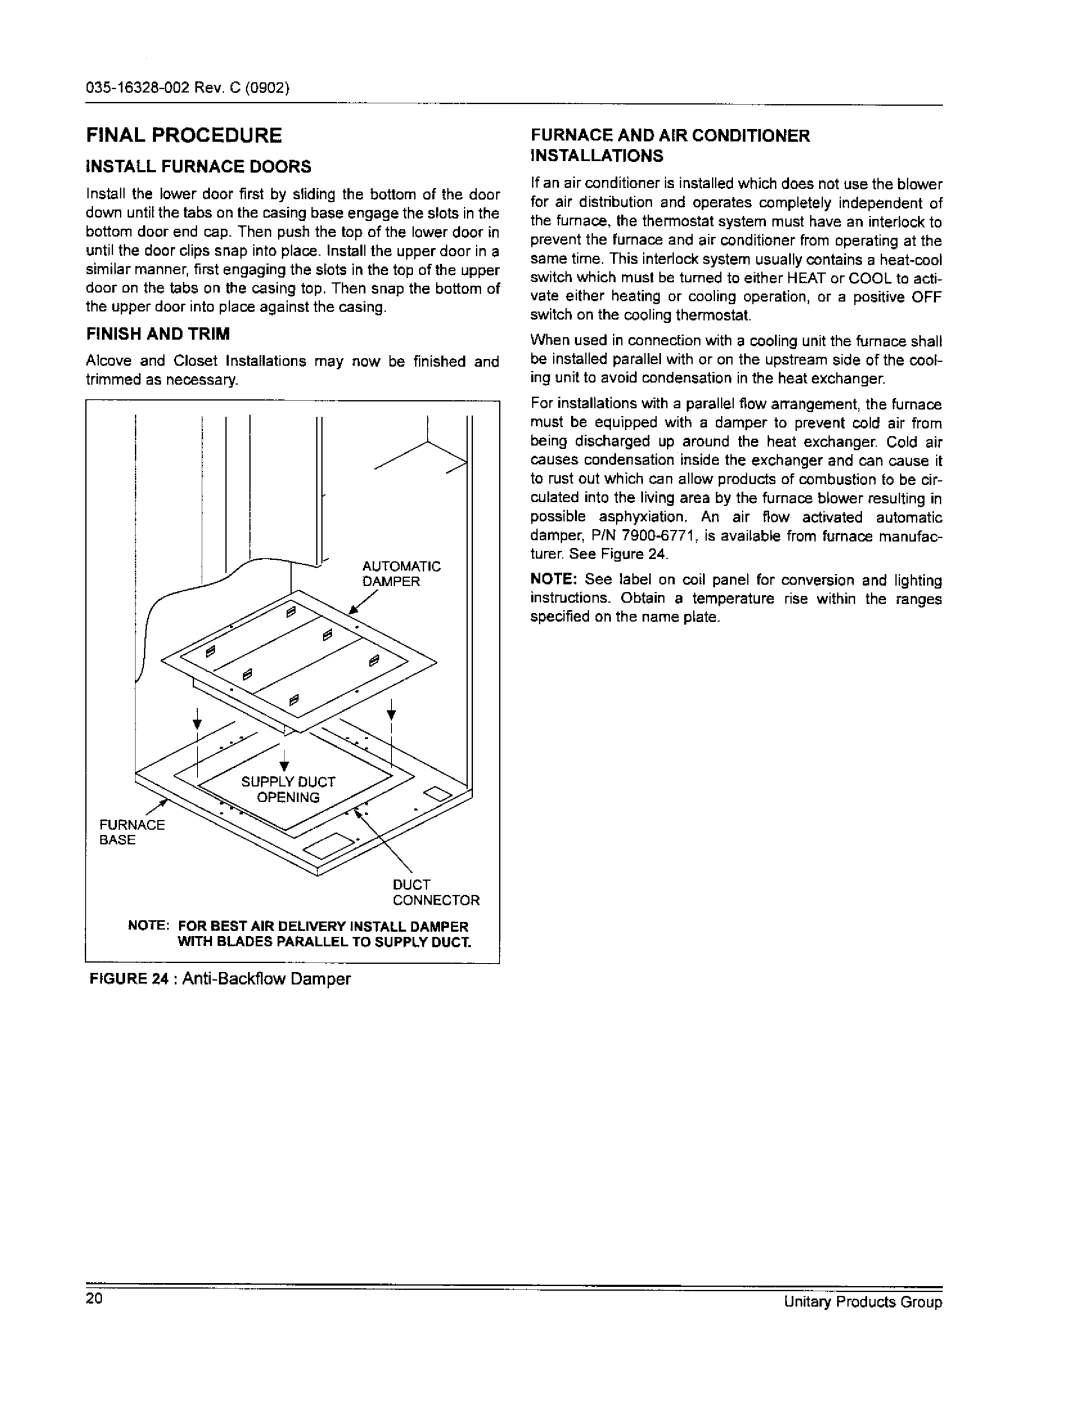 York DGAH056BBSA Final Procedure Install Furnace Doors, Furnace And Air Conditioner, Installations, 035-16328-Rev002C0902 